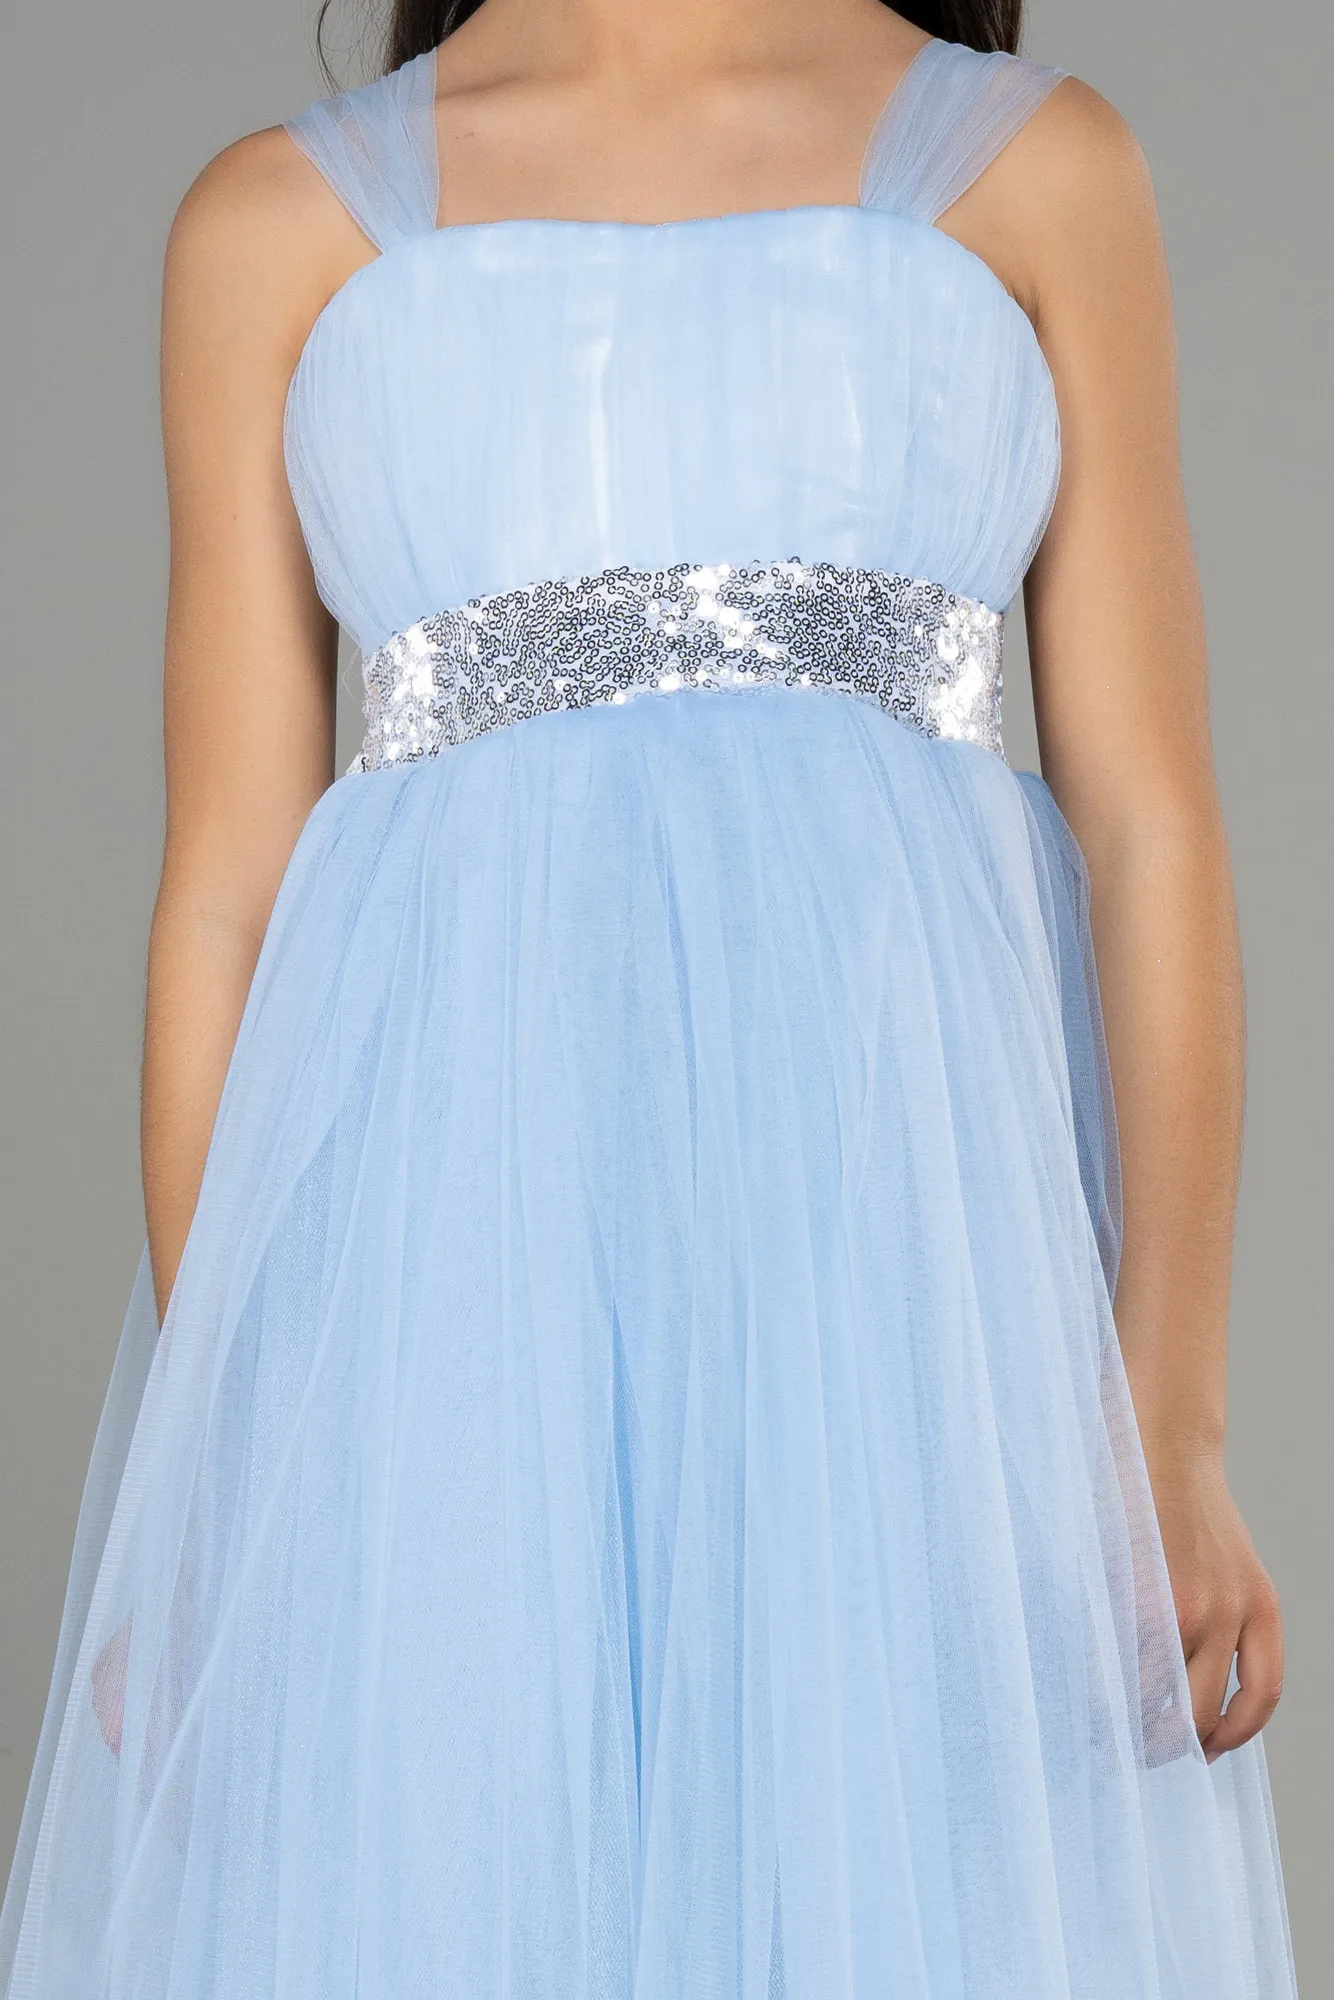 Ice Blue-Long Girl Dress ABU3031